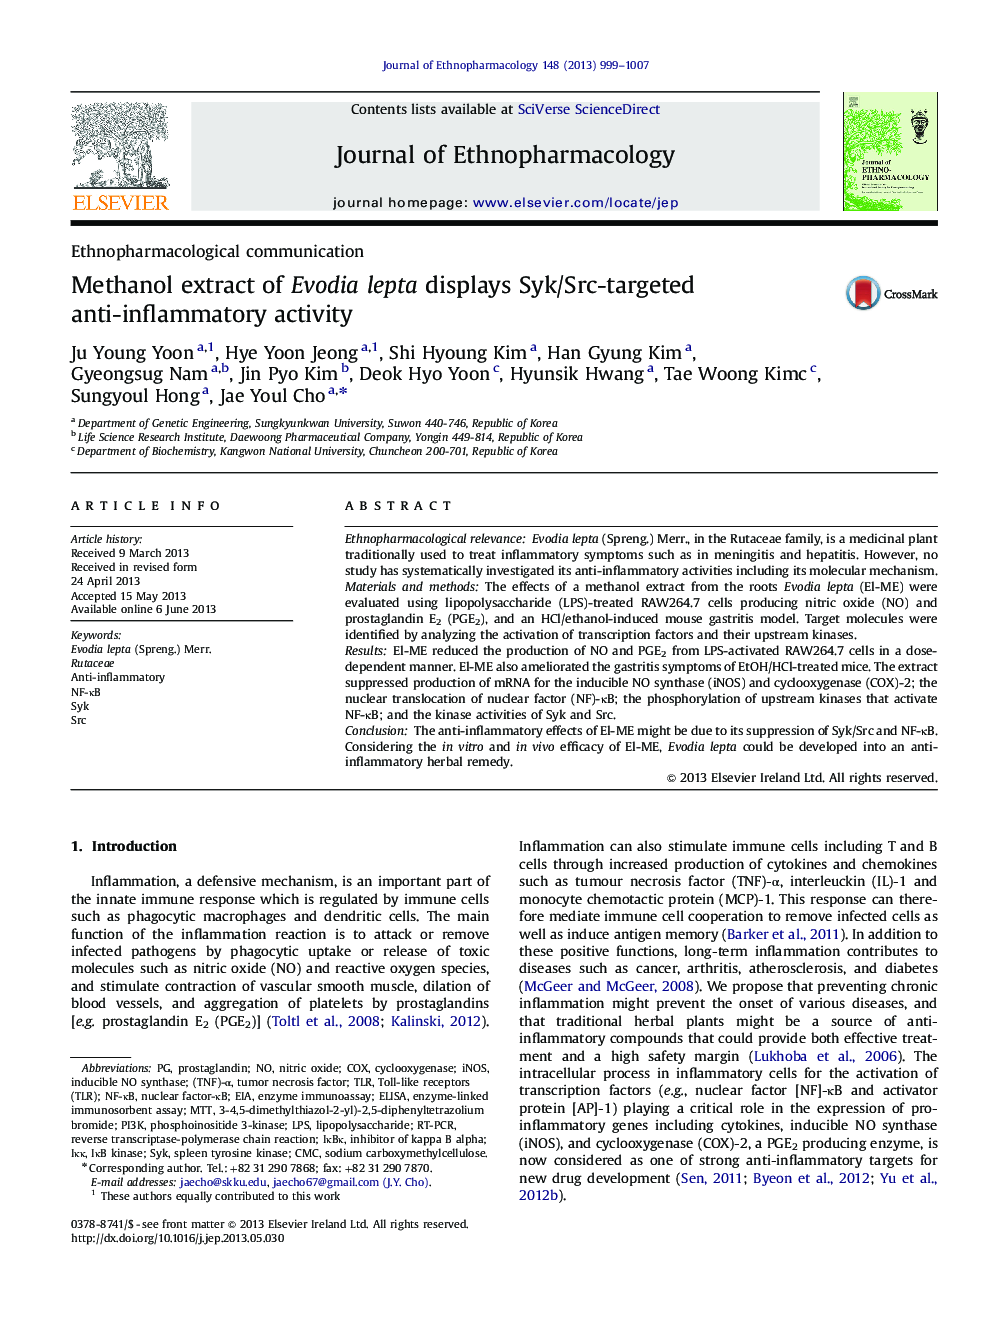 Ethnopharmacological communicationMethanol extract of Evodia lepta displays Syk/Src-targeted anti-inflammatory activity